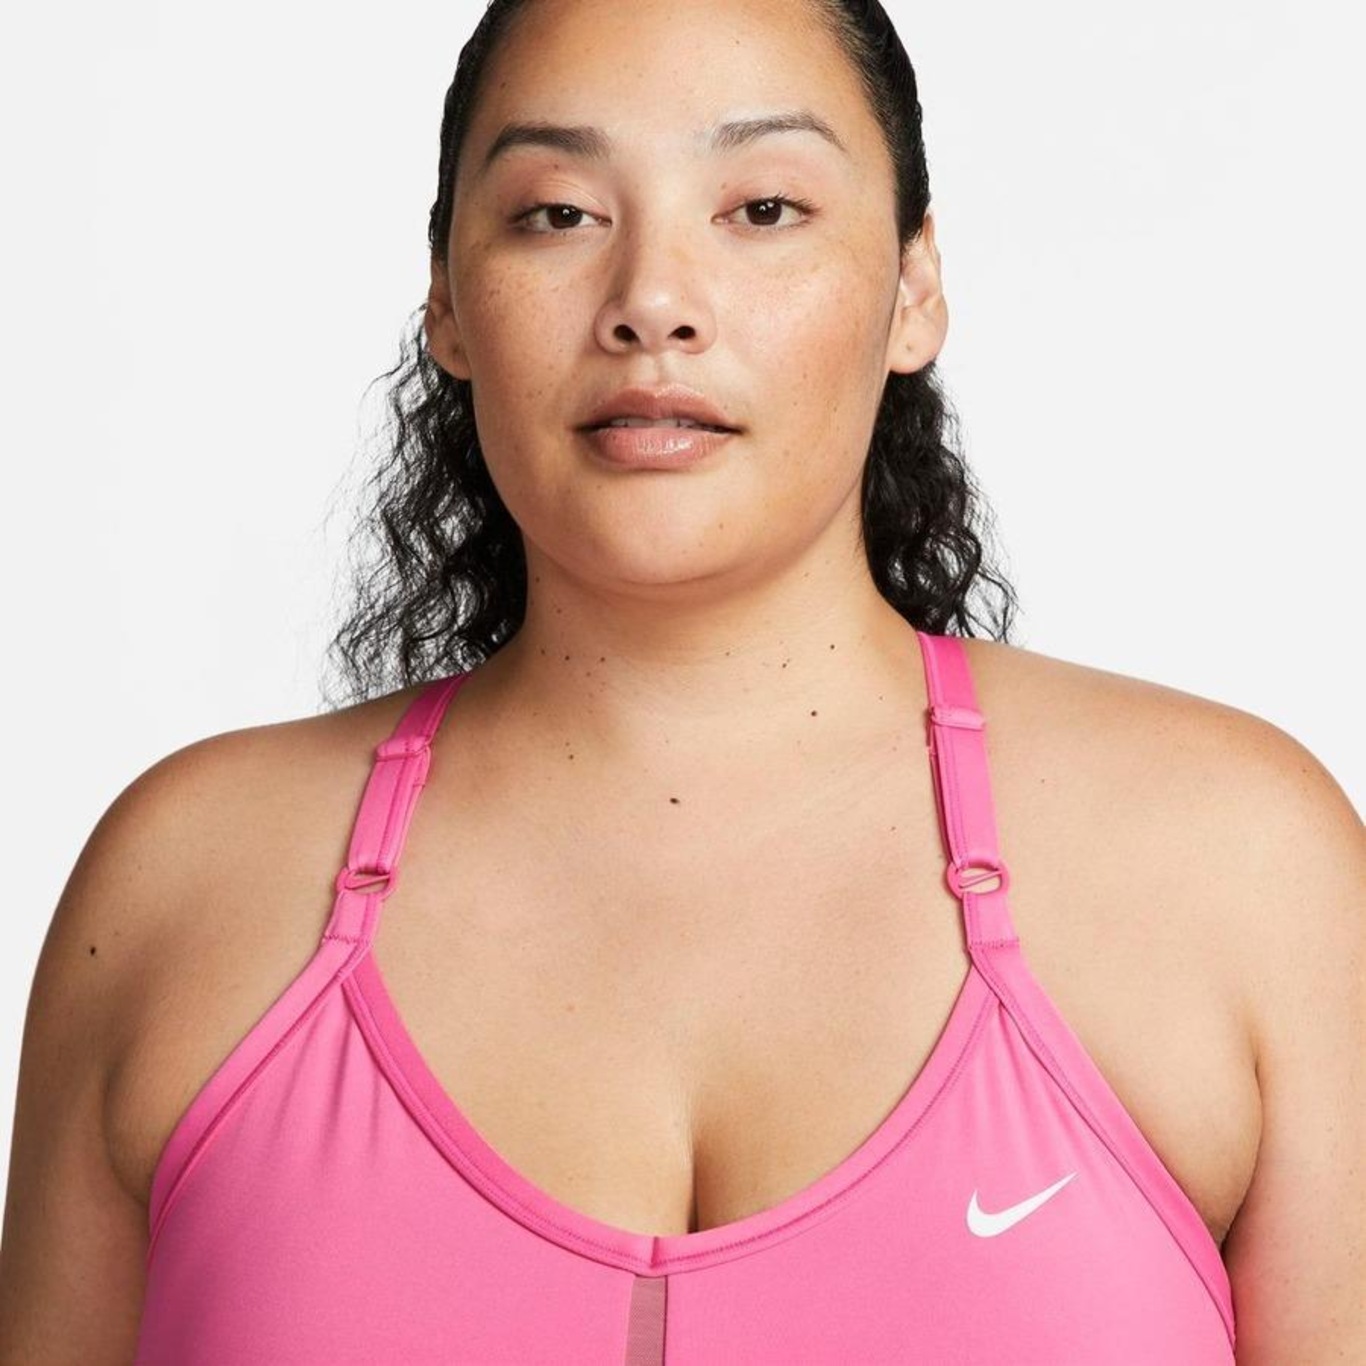 Nike Women's Plus Size Solid Indy Sports Bra 